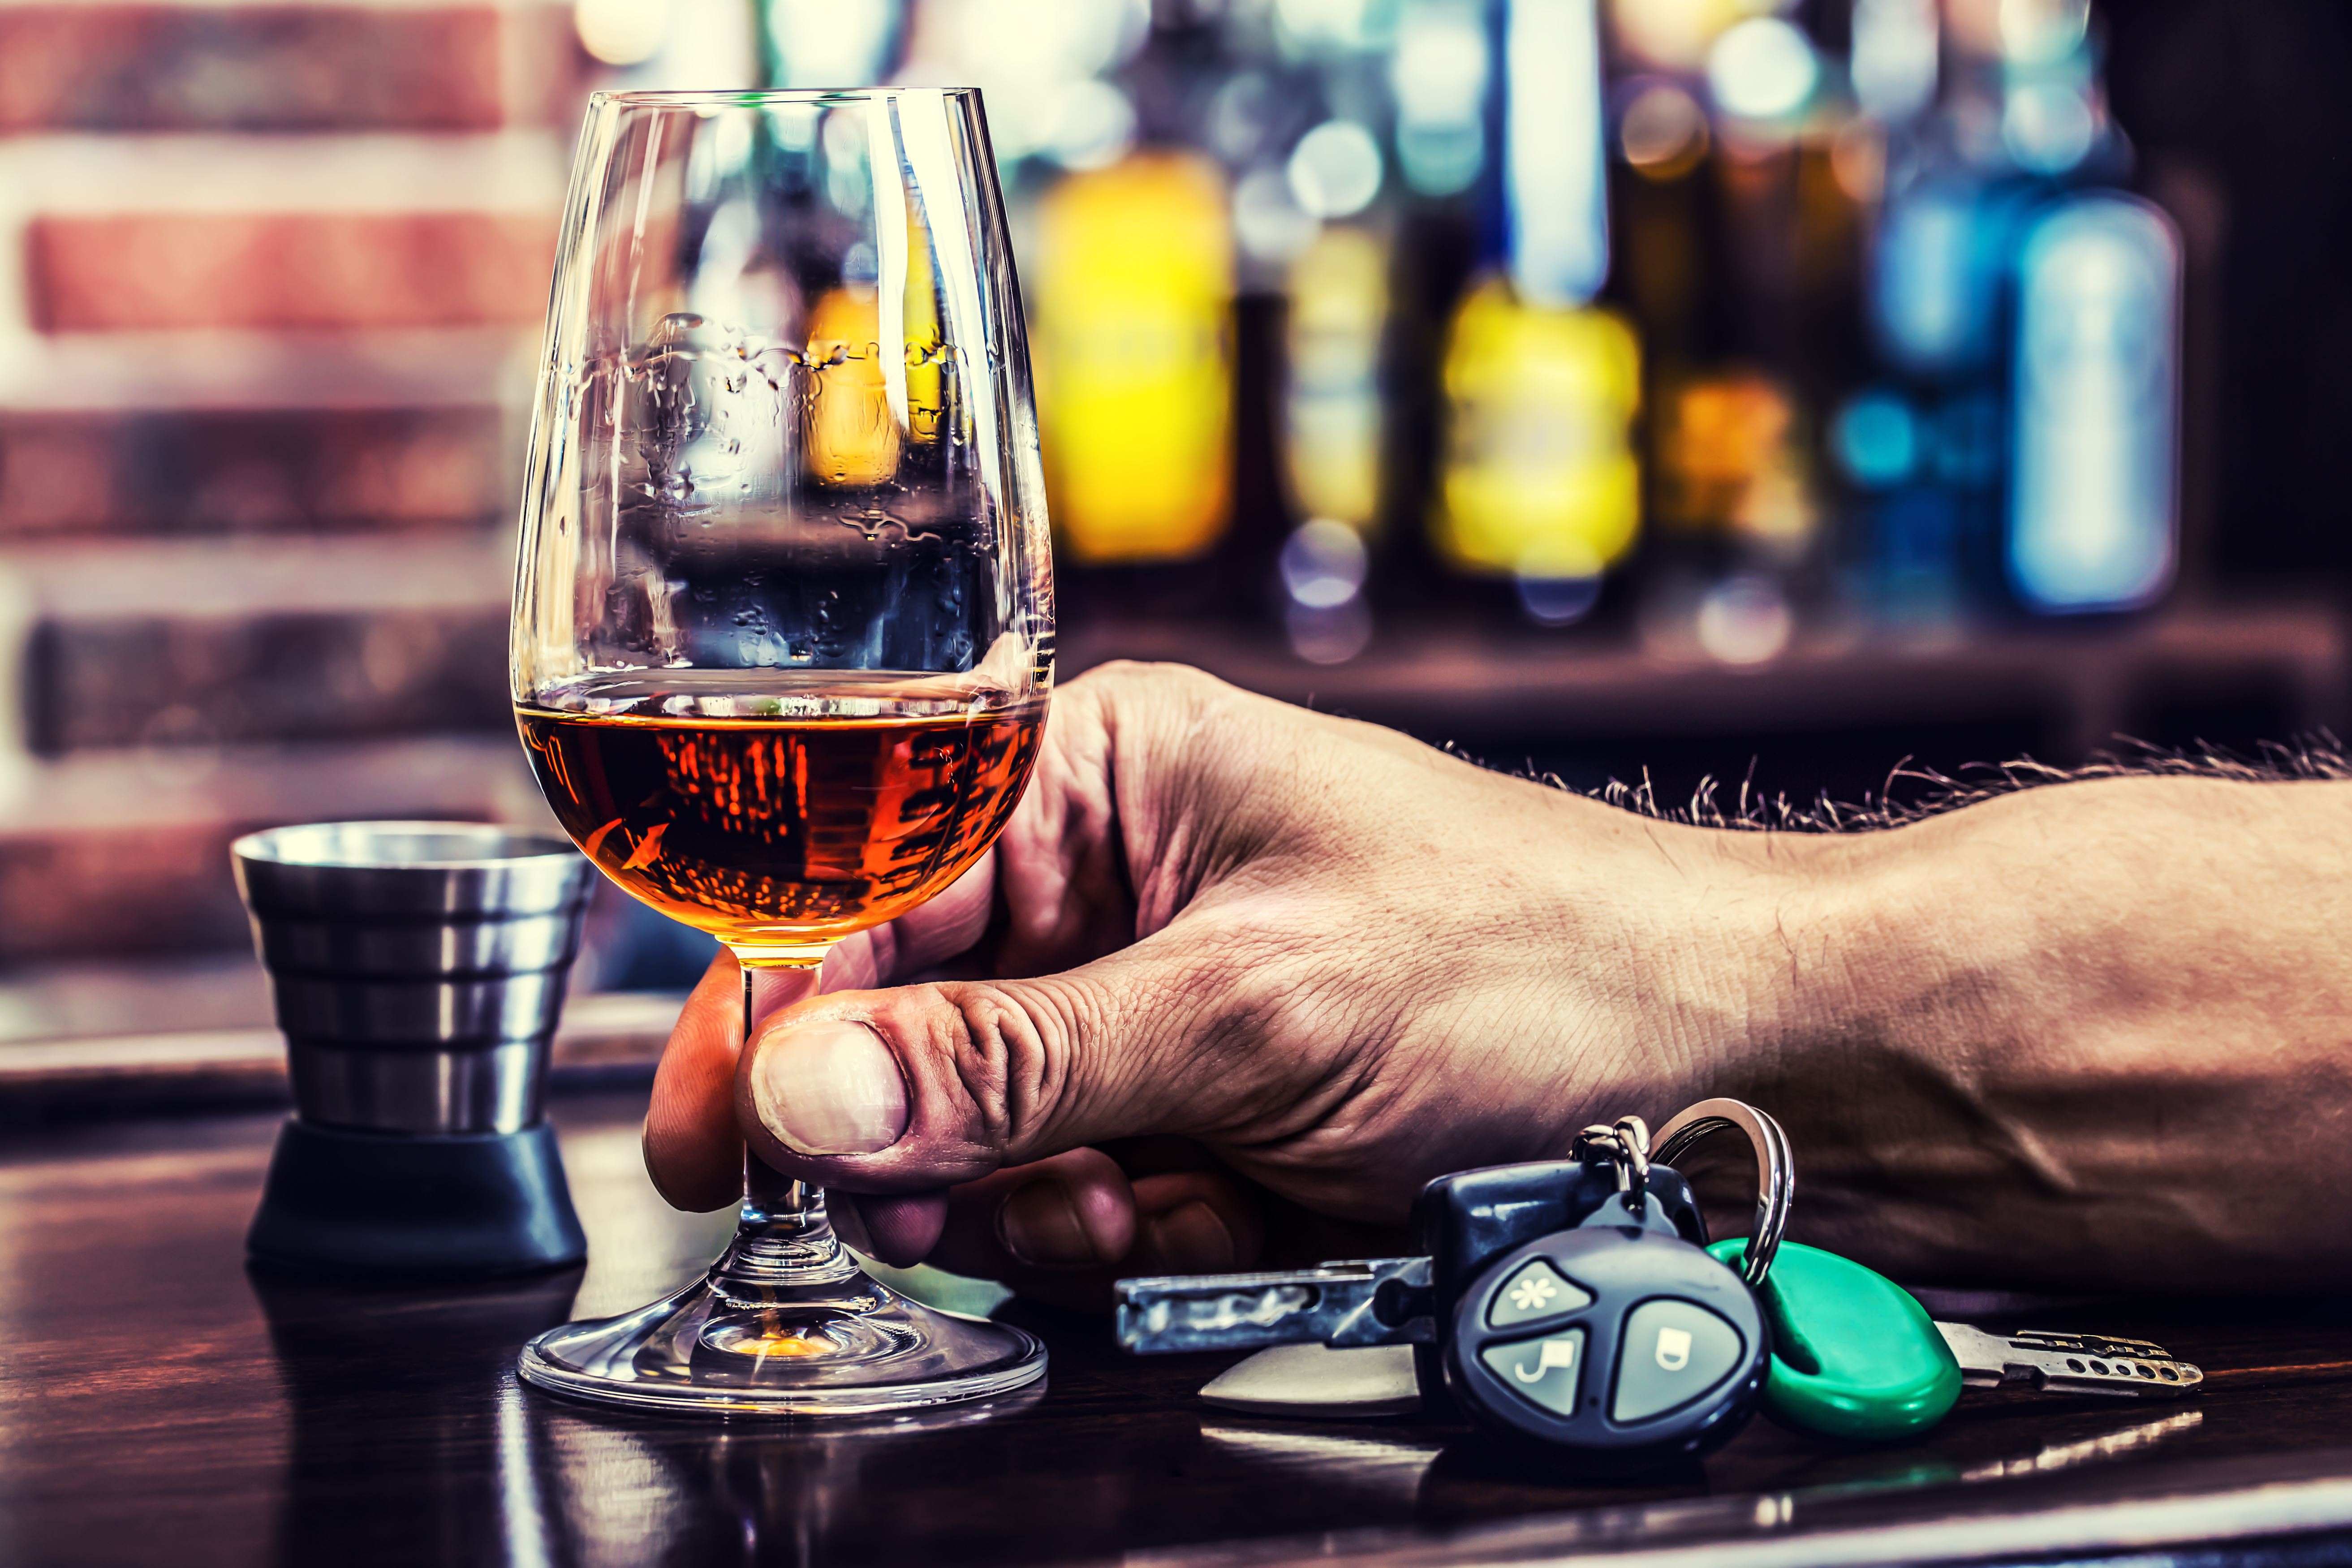 Alcohol and car keys - public intoxication Texas fine